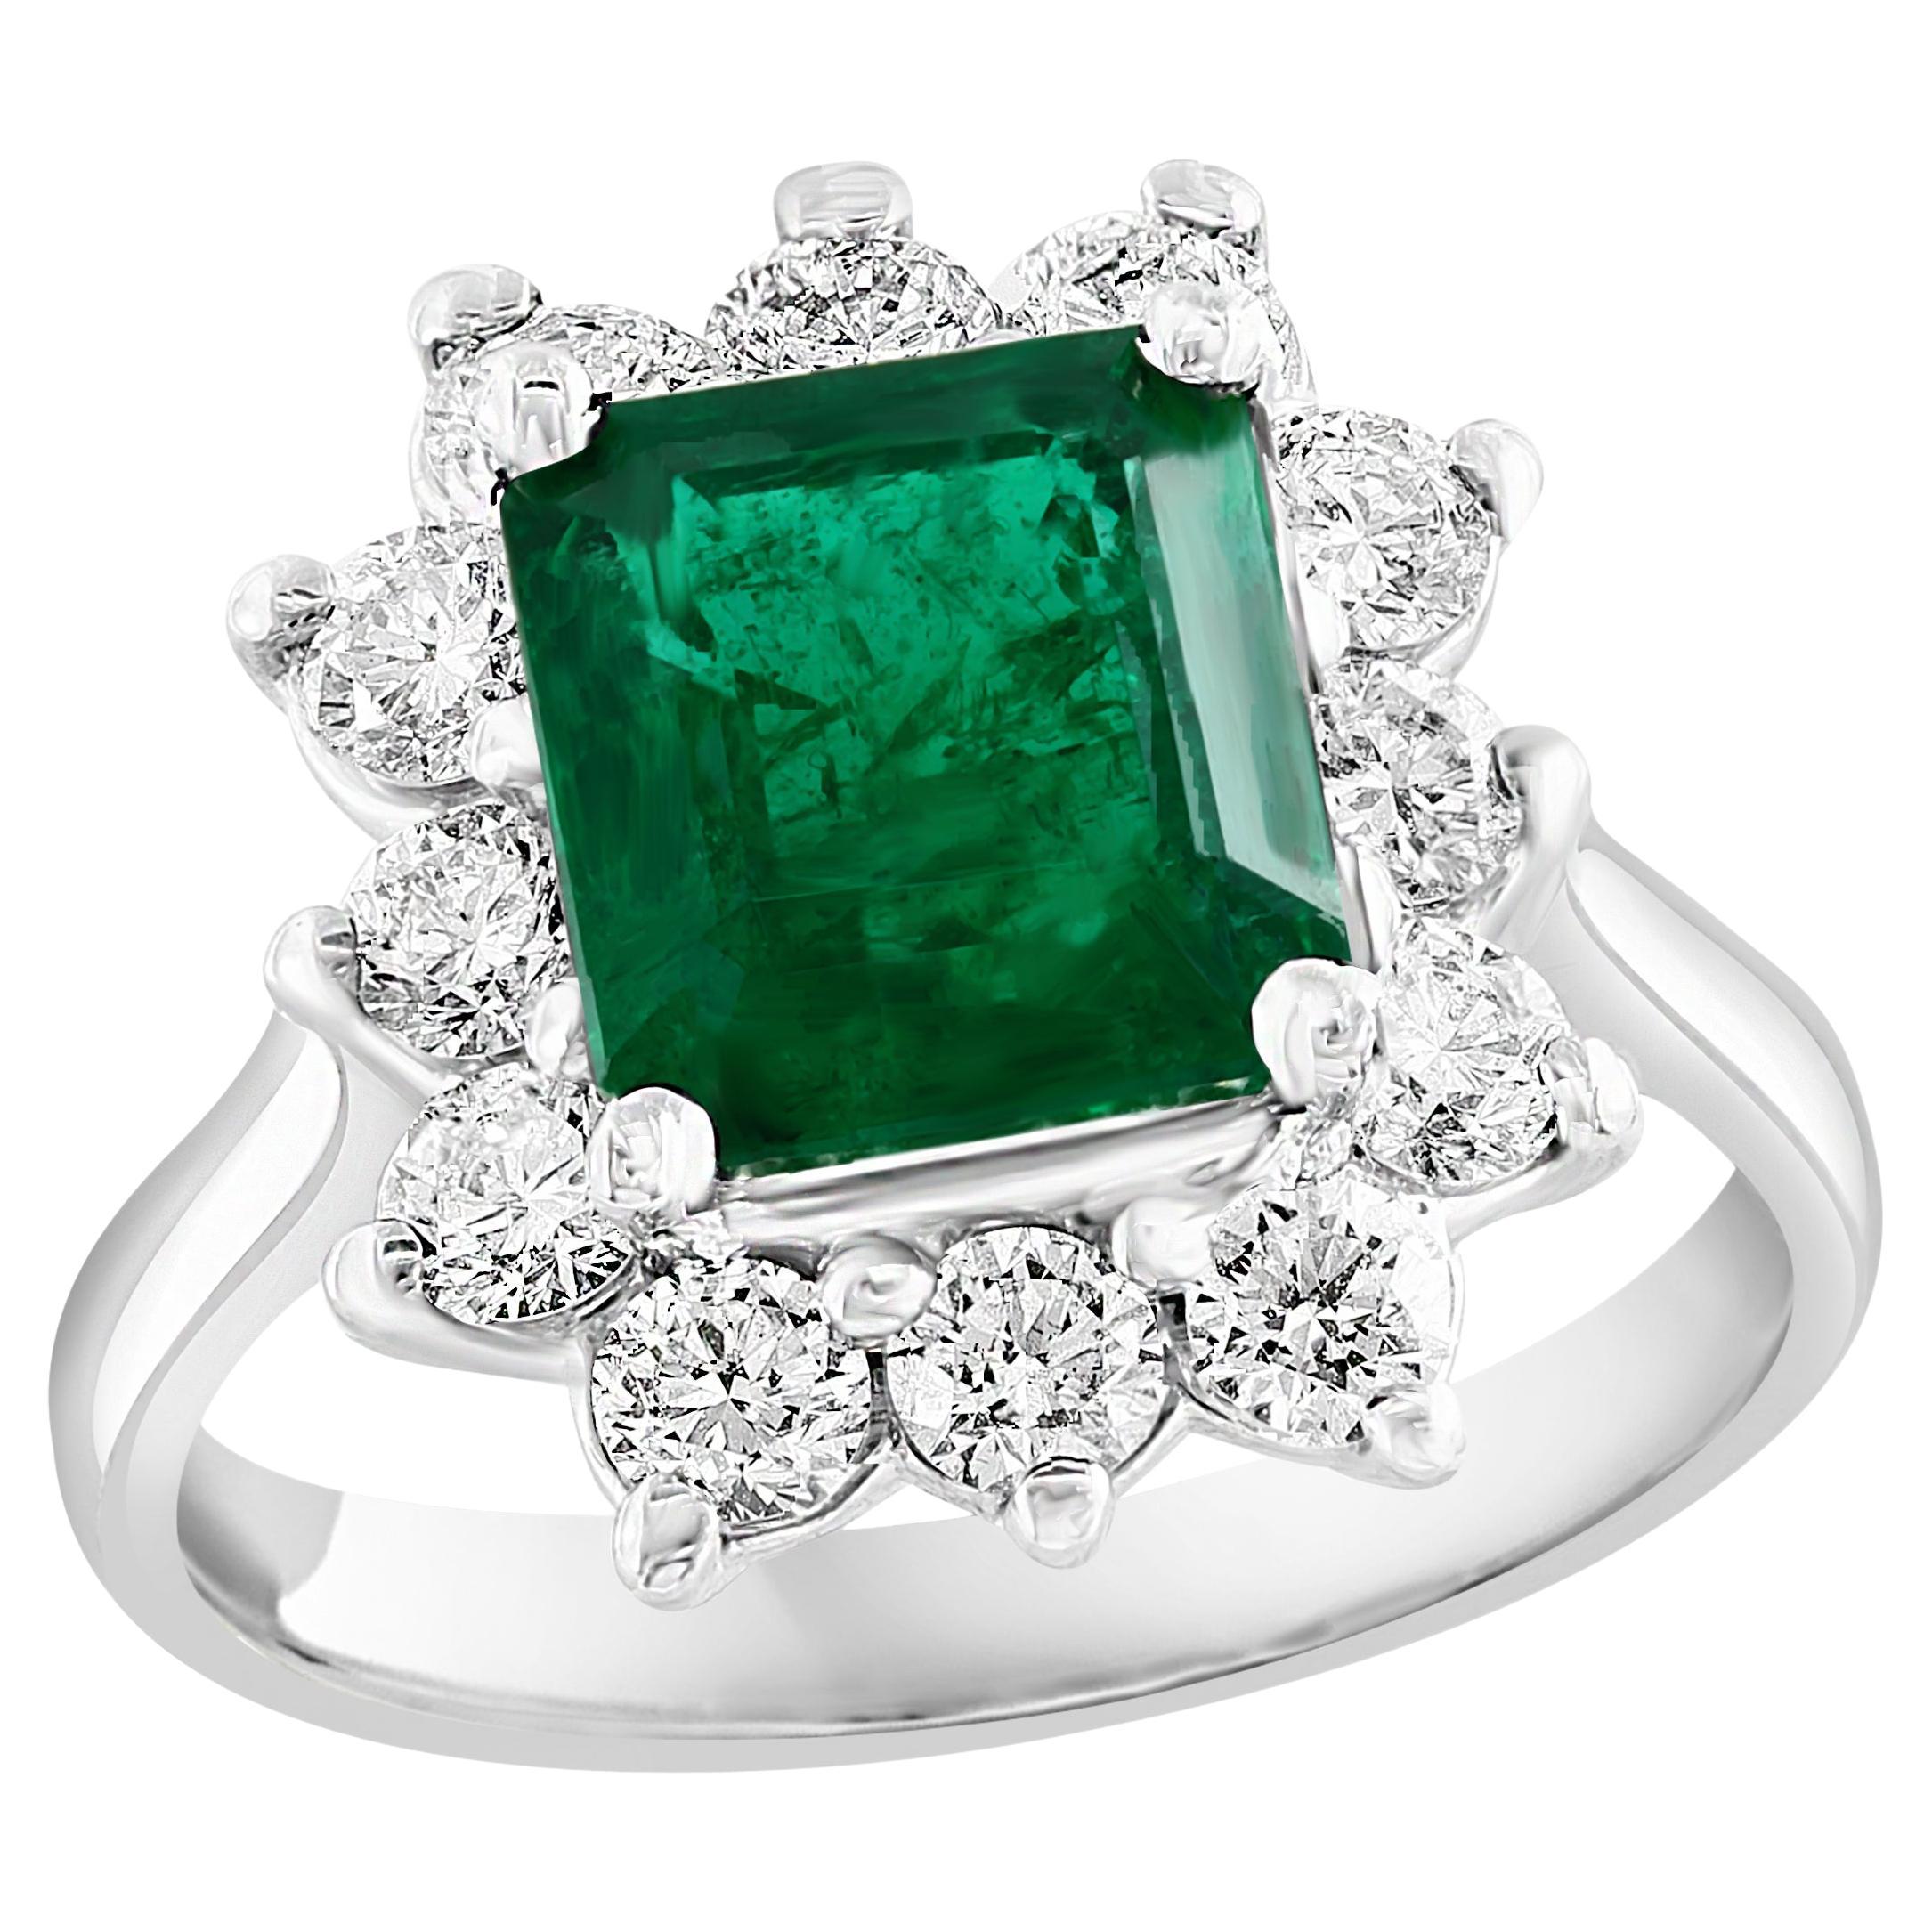 Certified 3.17 Carat Emerald Cut Emerald Diamond Ring in 14K White Gold For Sale